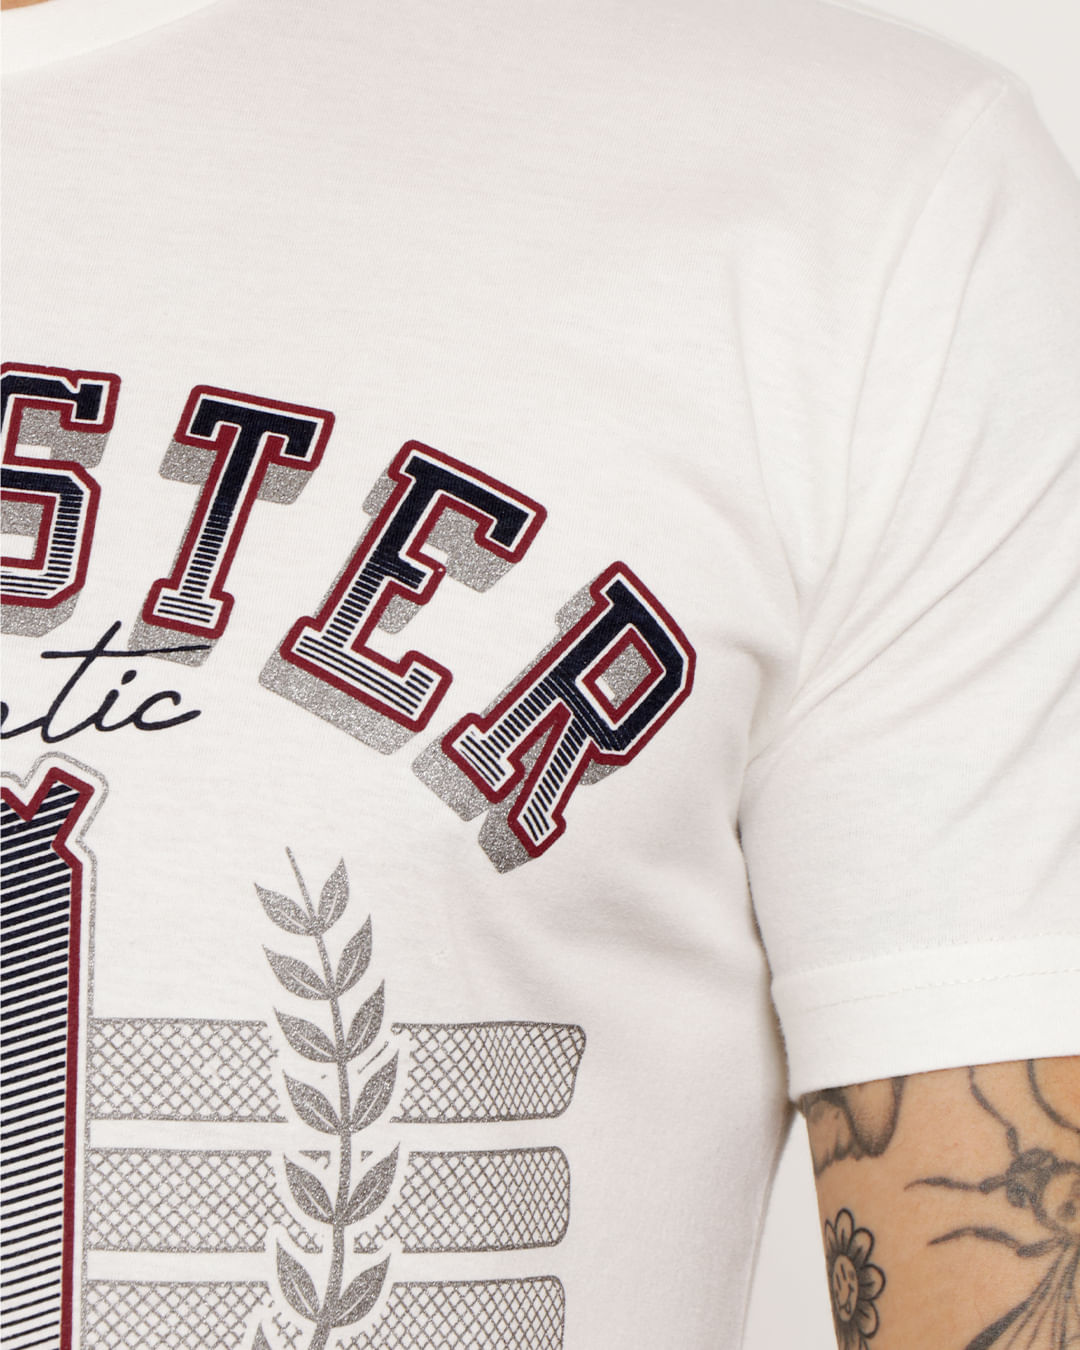 Camiseta-Gangster--10163177-Price-Pgg---Off-White